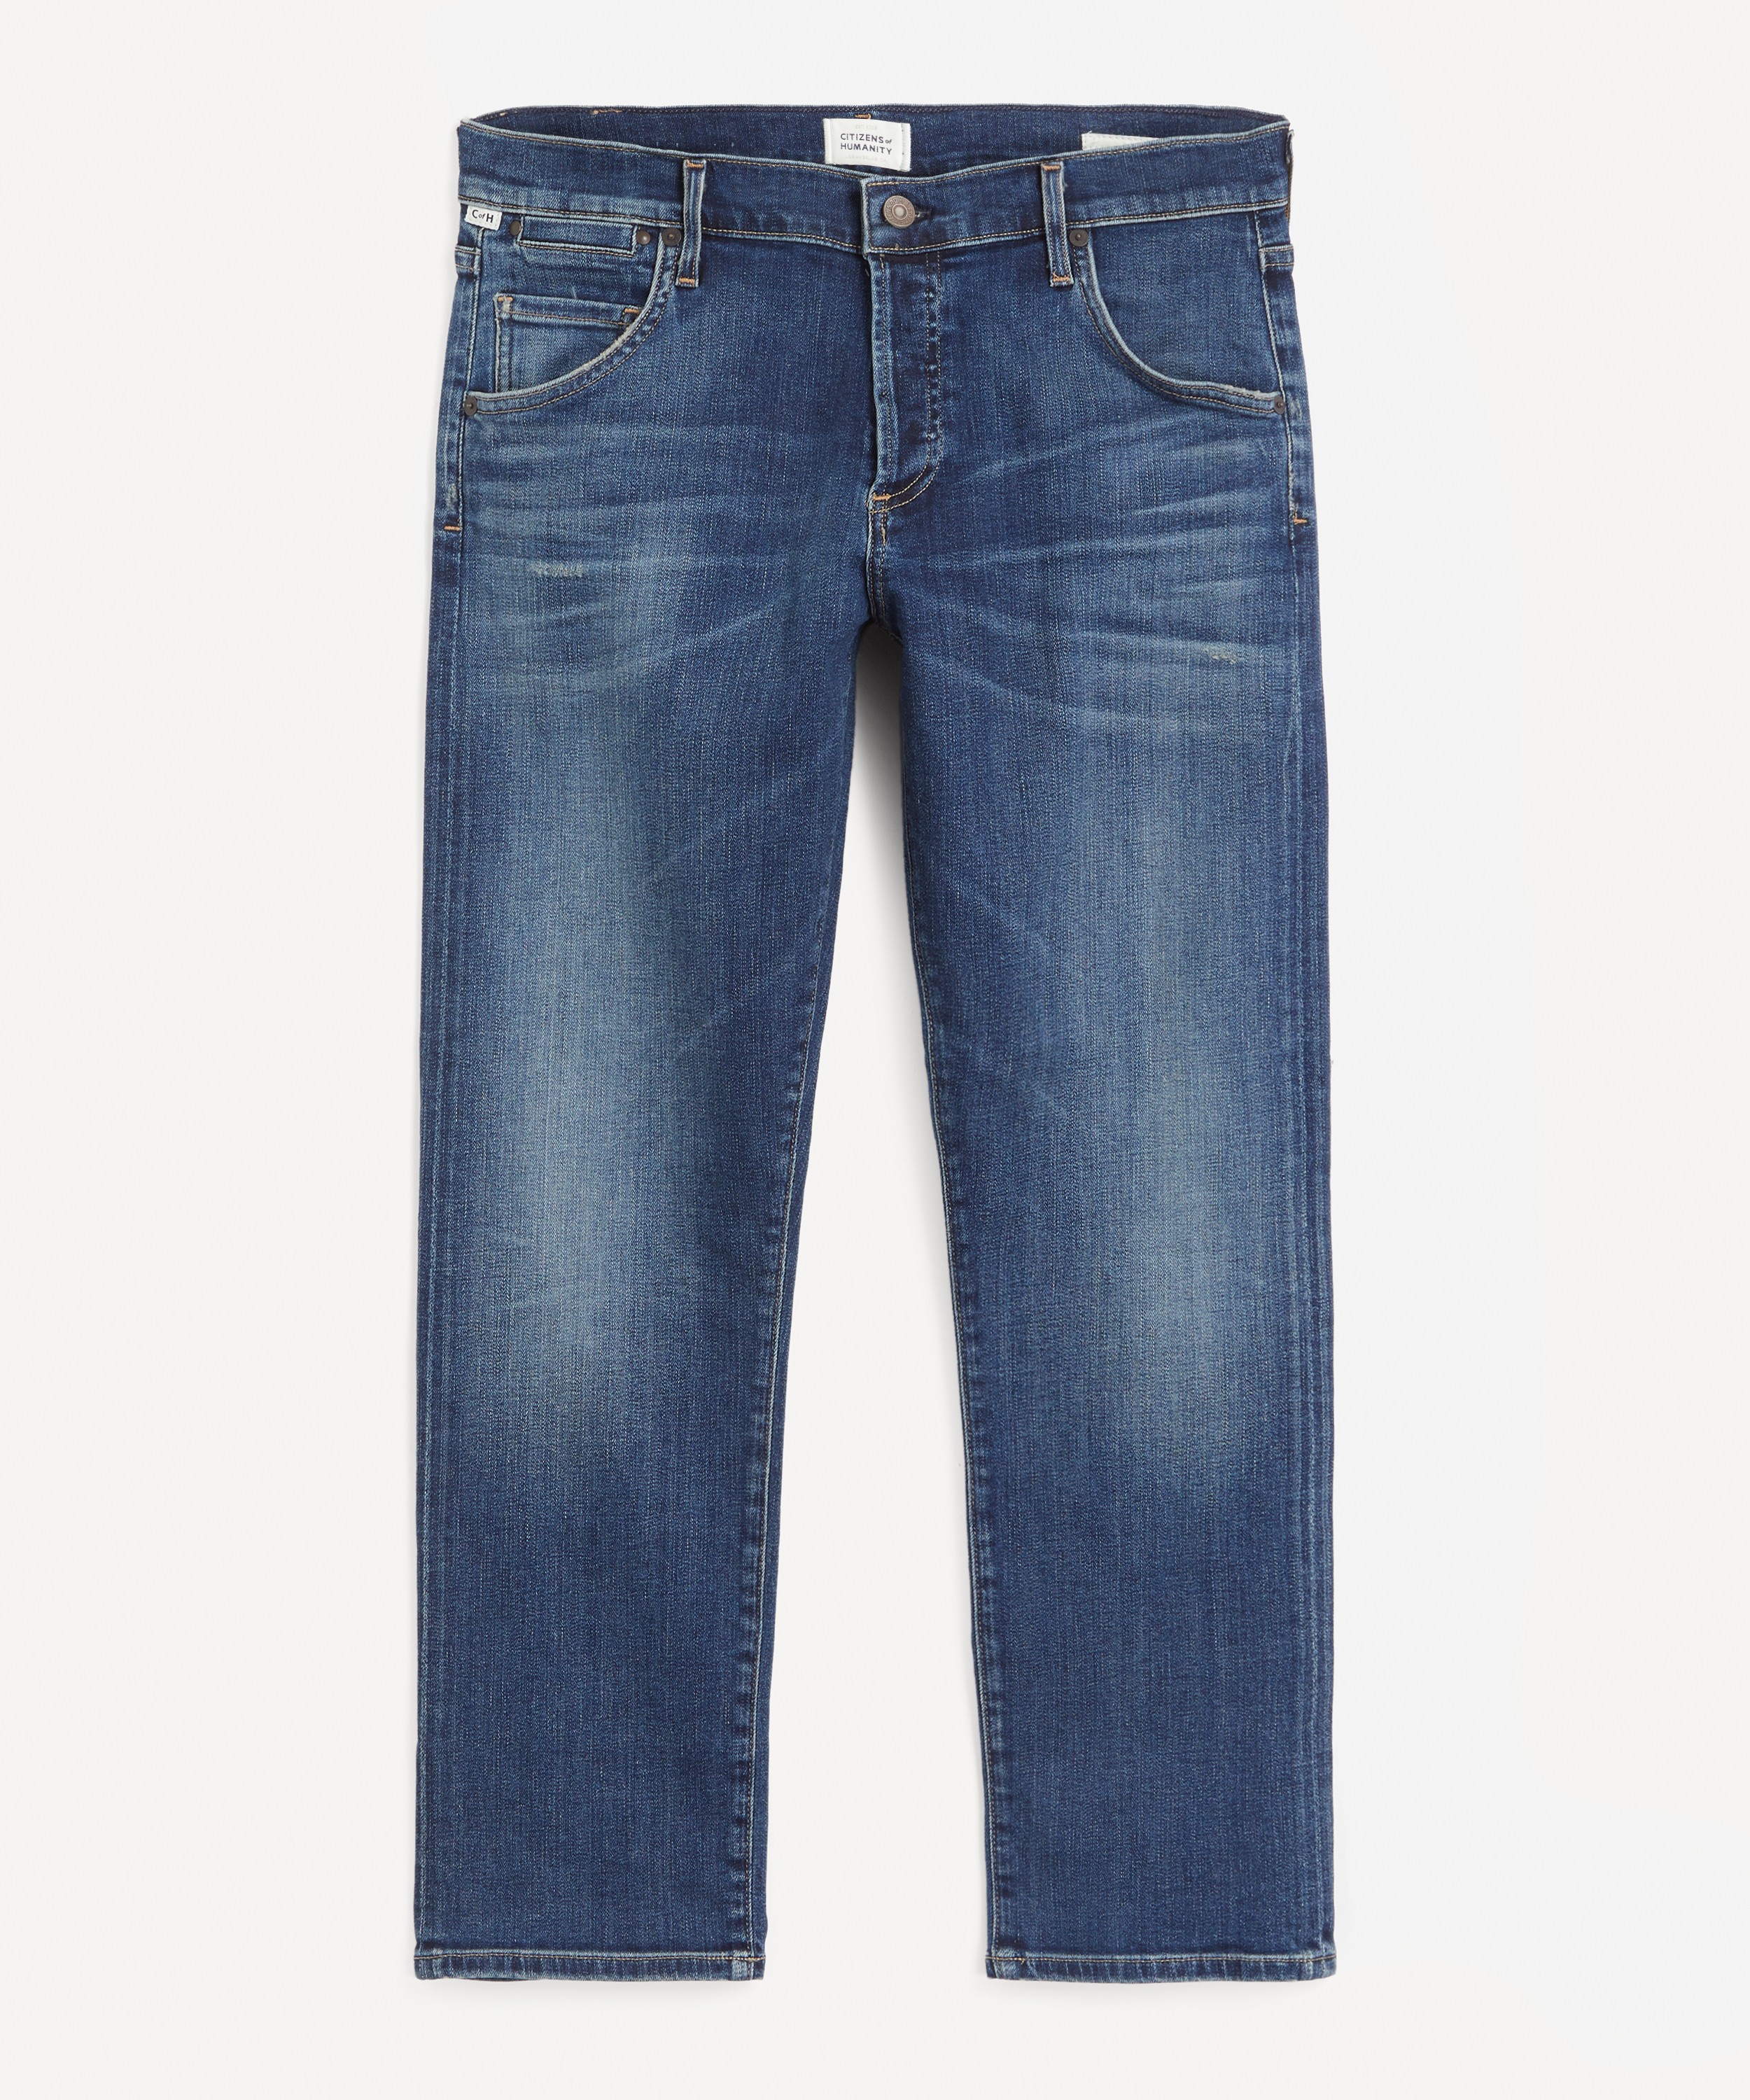 Levi's Vintage Bell Bottom Jeans 1970s Flared Denim Pants High Waist Jeans  White Tab Made in France NOS Size US 27/28 -  Denmark